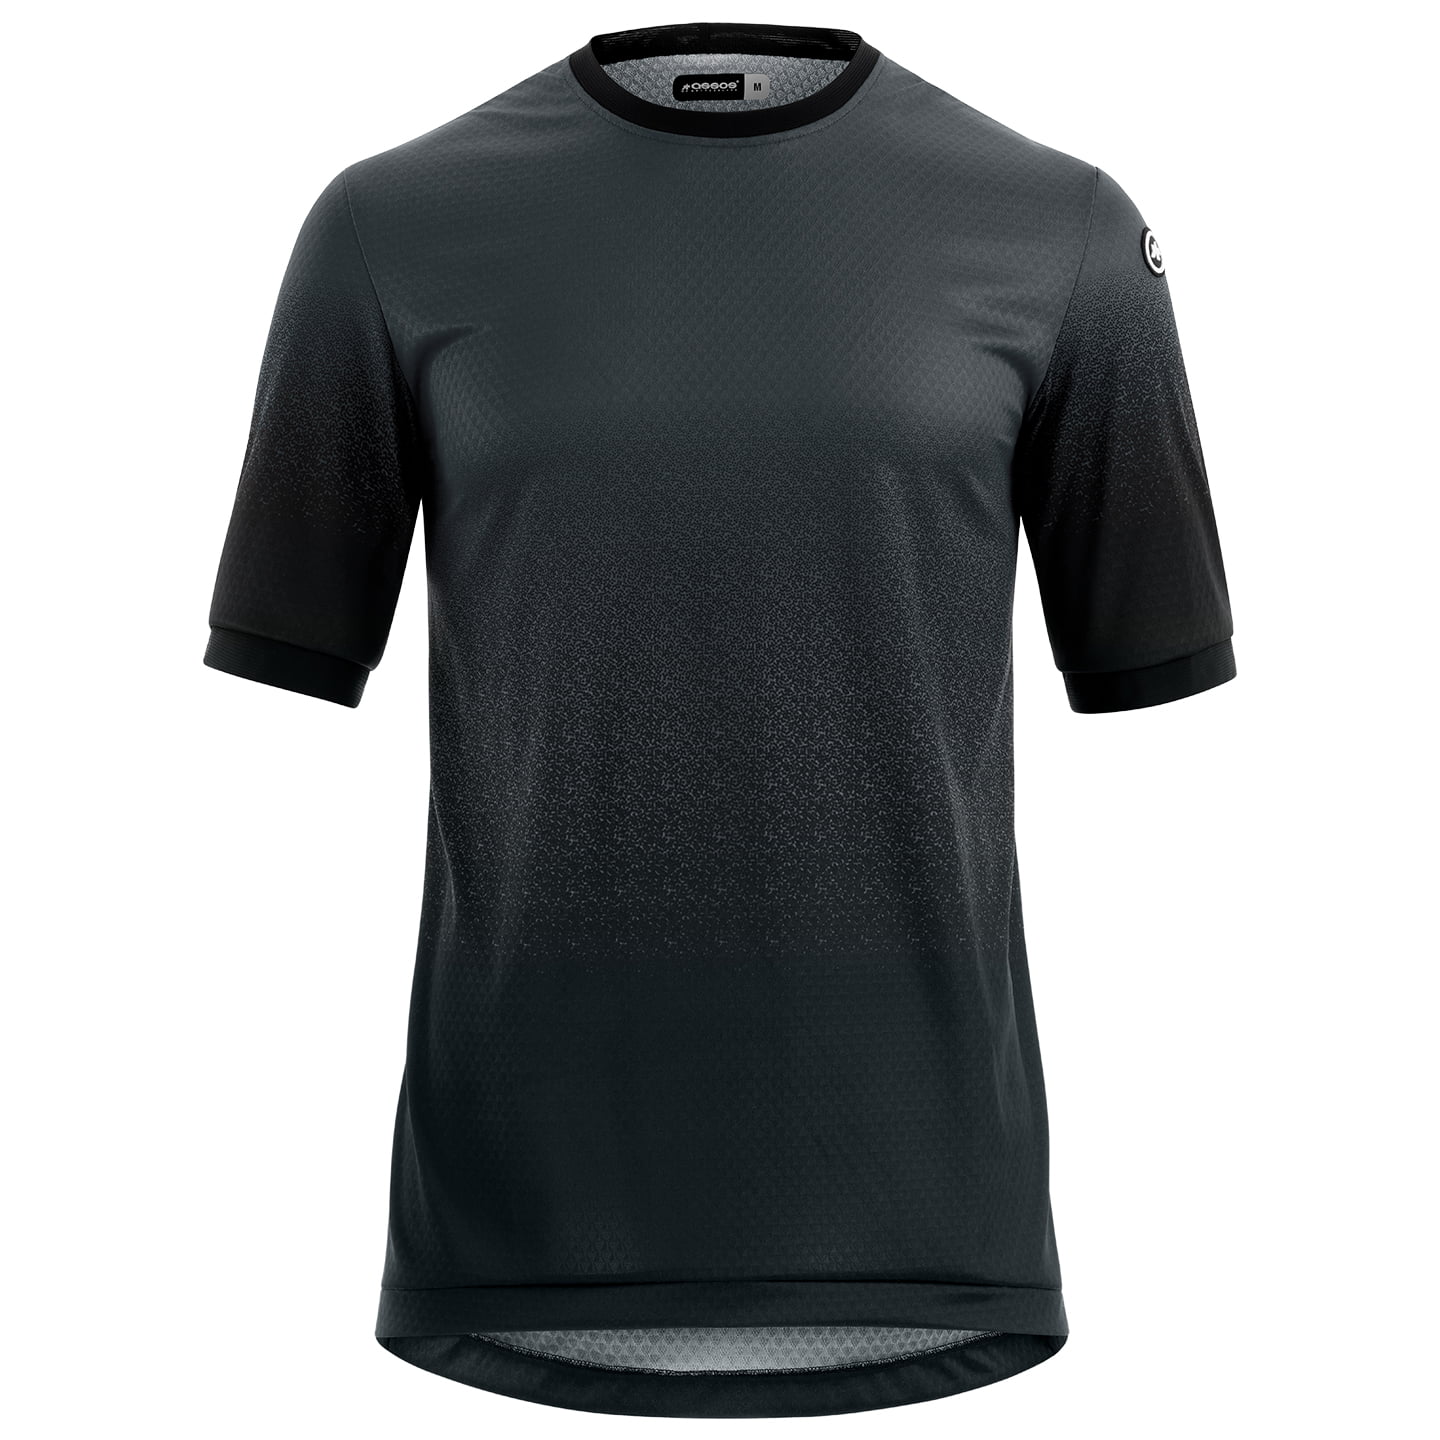 ASSOS Trail T3 Bike Shirt, for men, size L, Cycling jersey, Cycling clothing